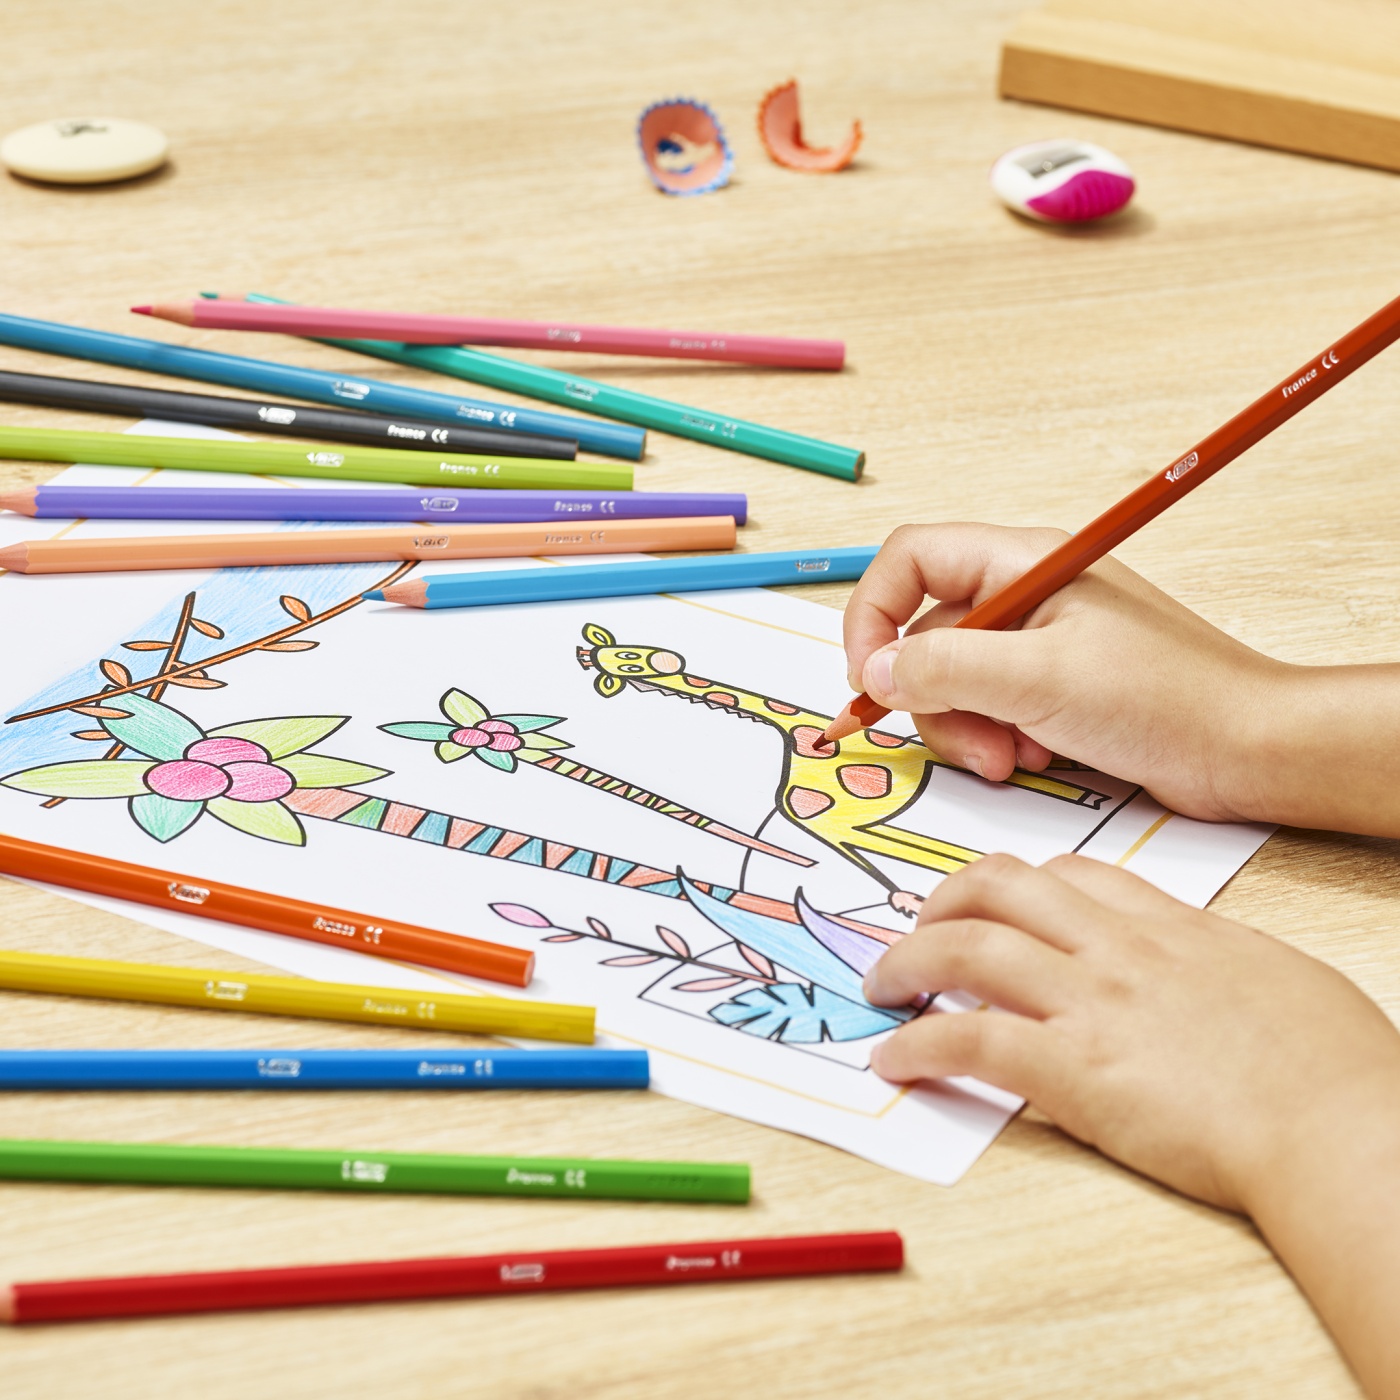 Kids Tropicolors Buntstifte 18er-Set (ab 5 Jahren) in der Gruppe Kids / Stifte für Kinder / Buntstifte für Kinder bei Pen Store (100240)